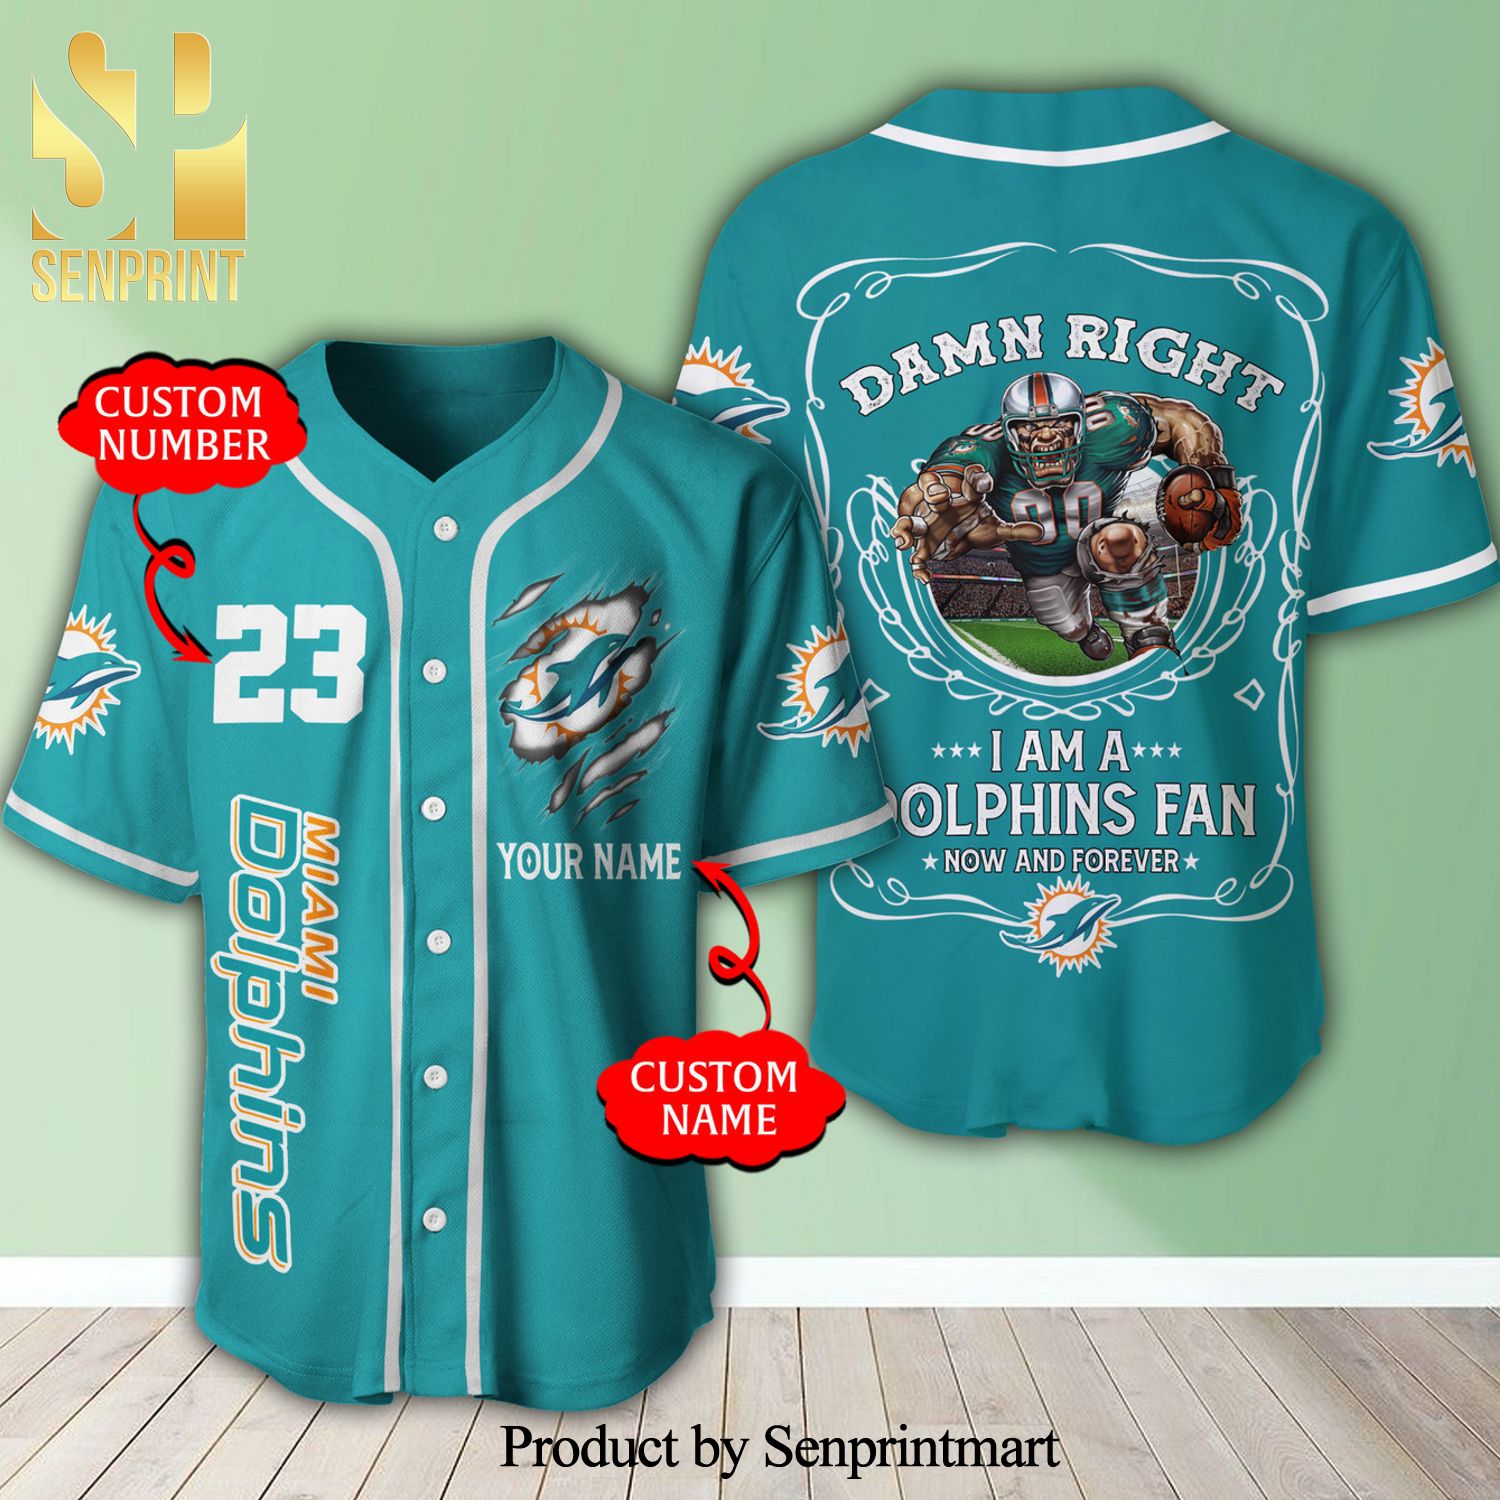 Personalized I Am A Miami Dolphins Fan Mascot Full Printing Baseball Jersey – Cyan Blue